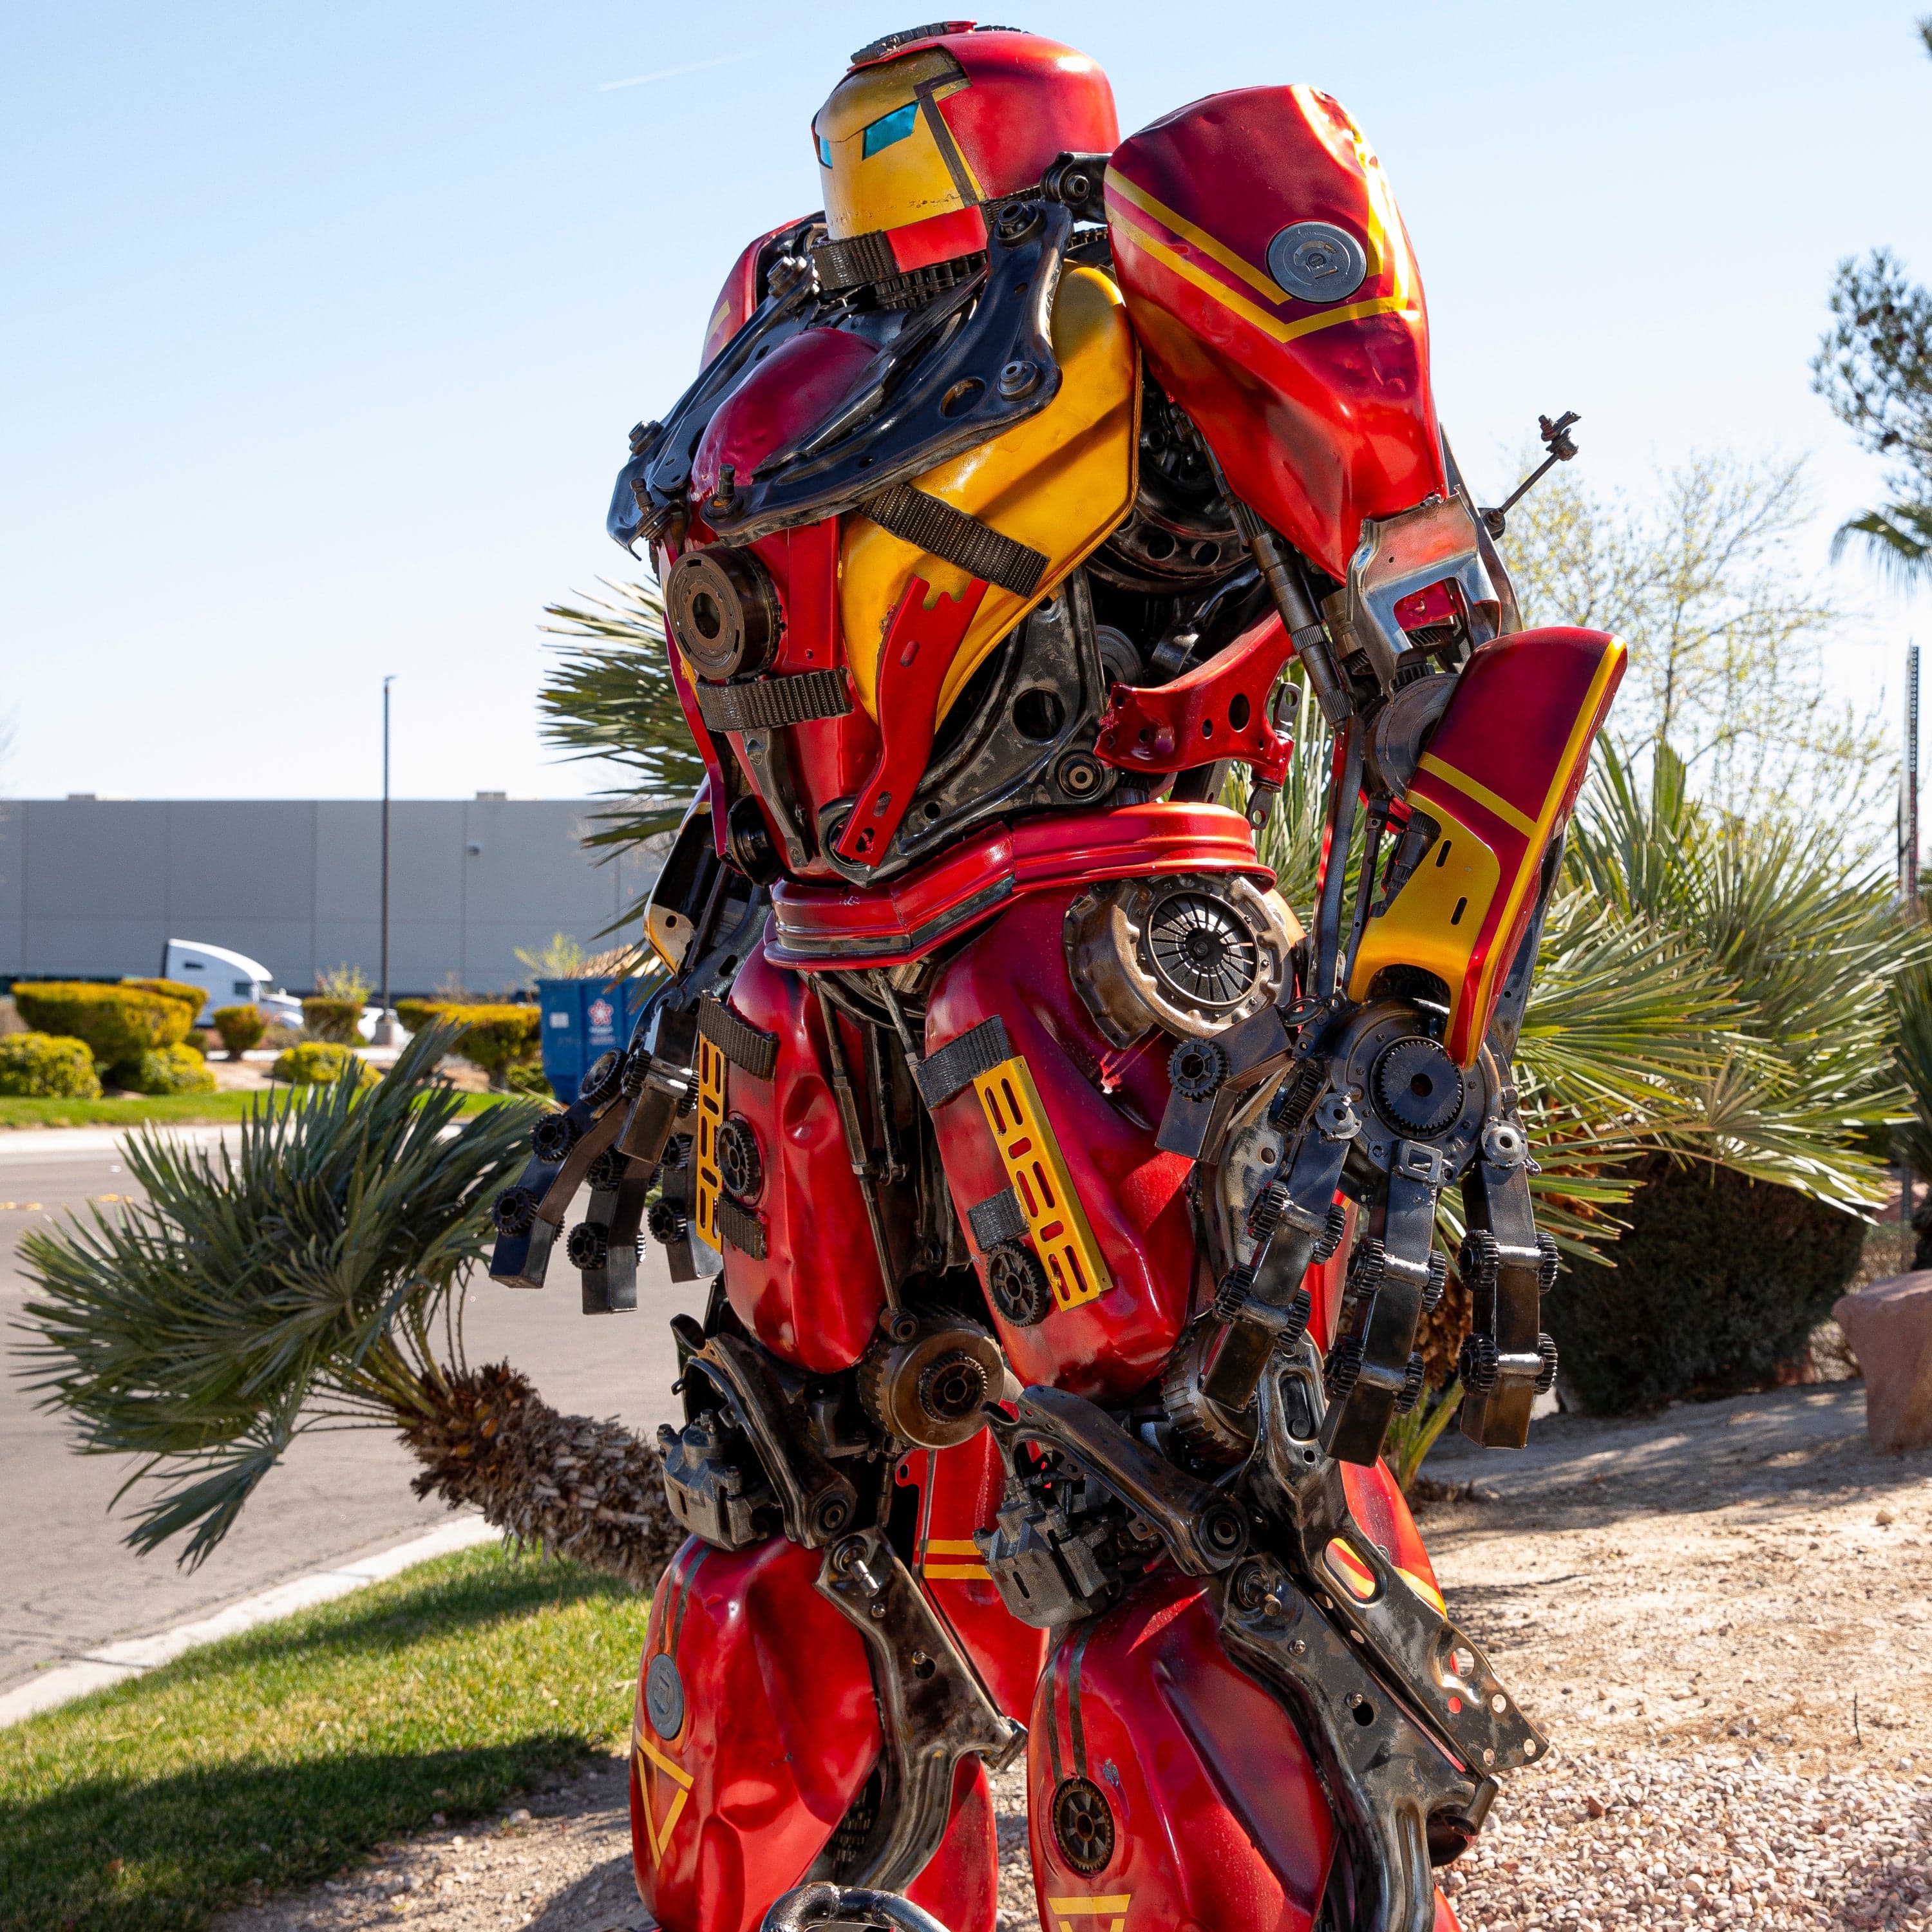 Kalifano Recycled Metal Art 102" Iron Man Hulk Buster Inspired Recycled Metal Art Sculpture RMS-IMR260-S03